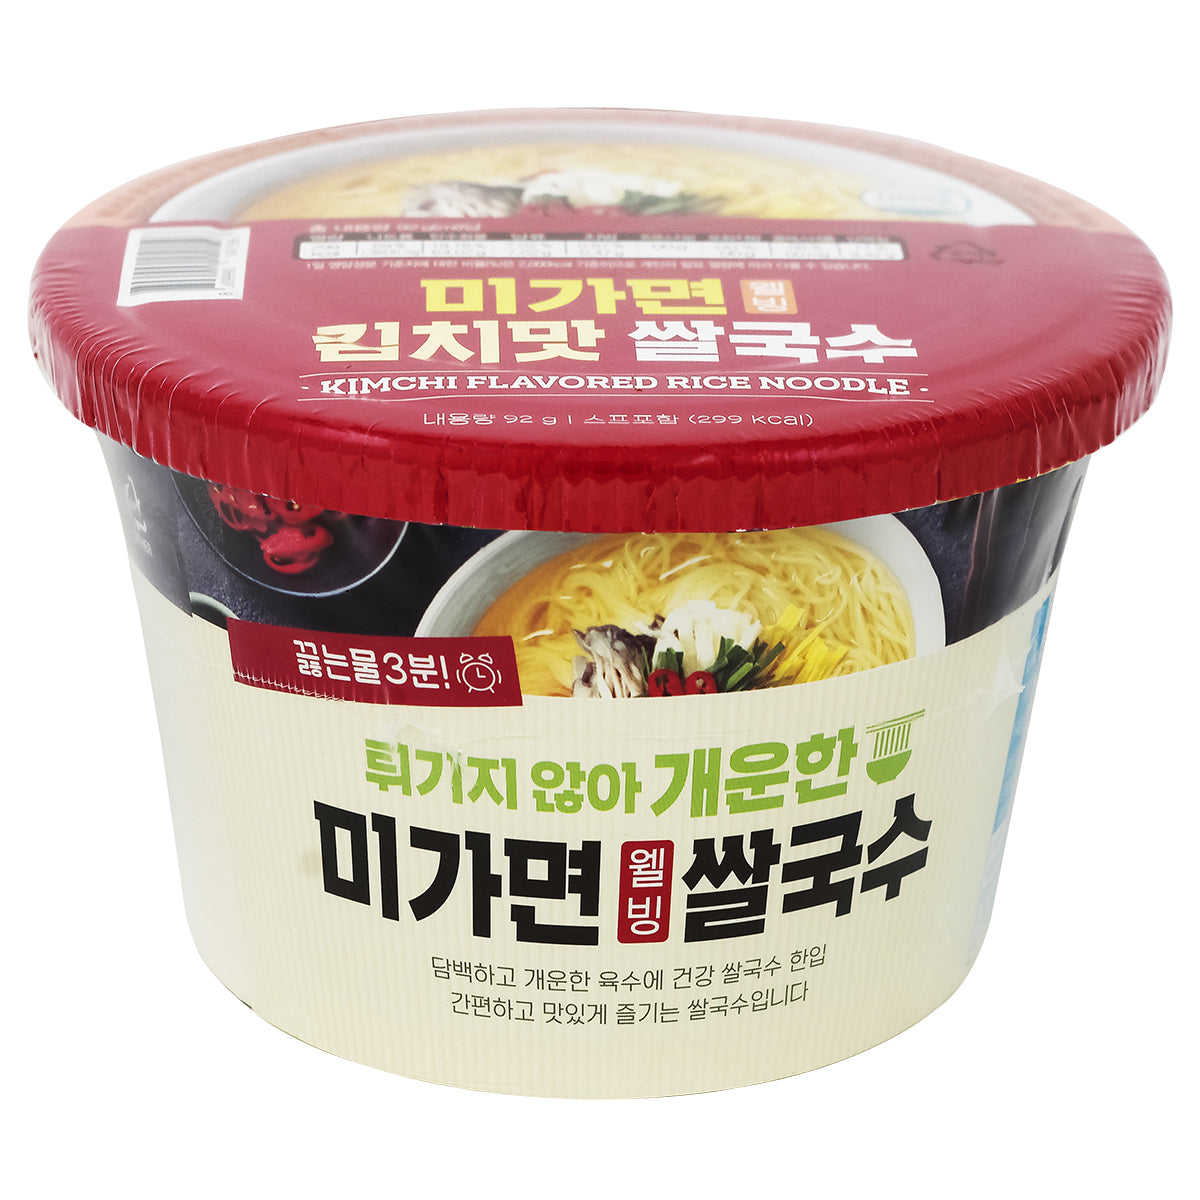 Rice Noodle Kimchi Flavor 김치맛 쌀국수